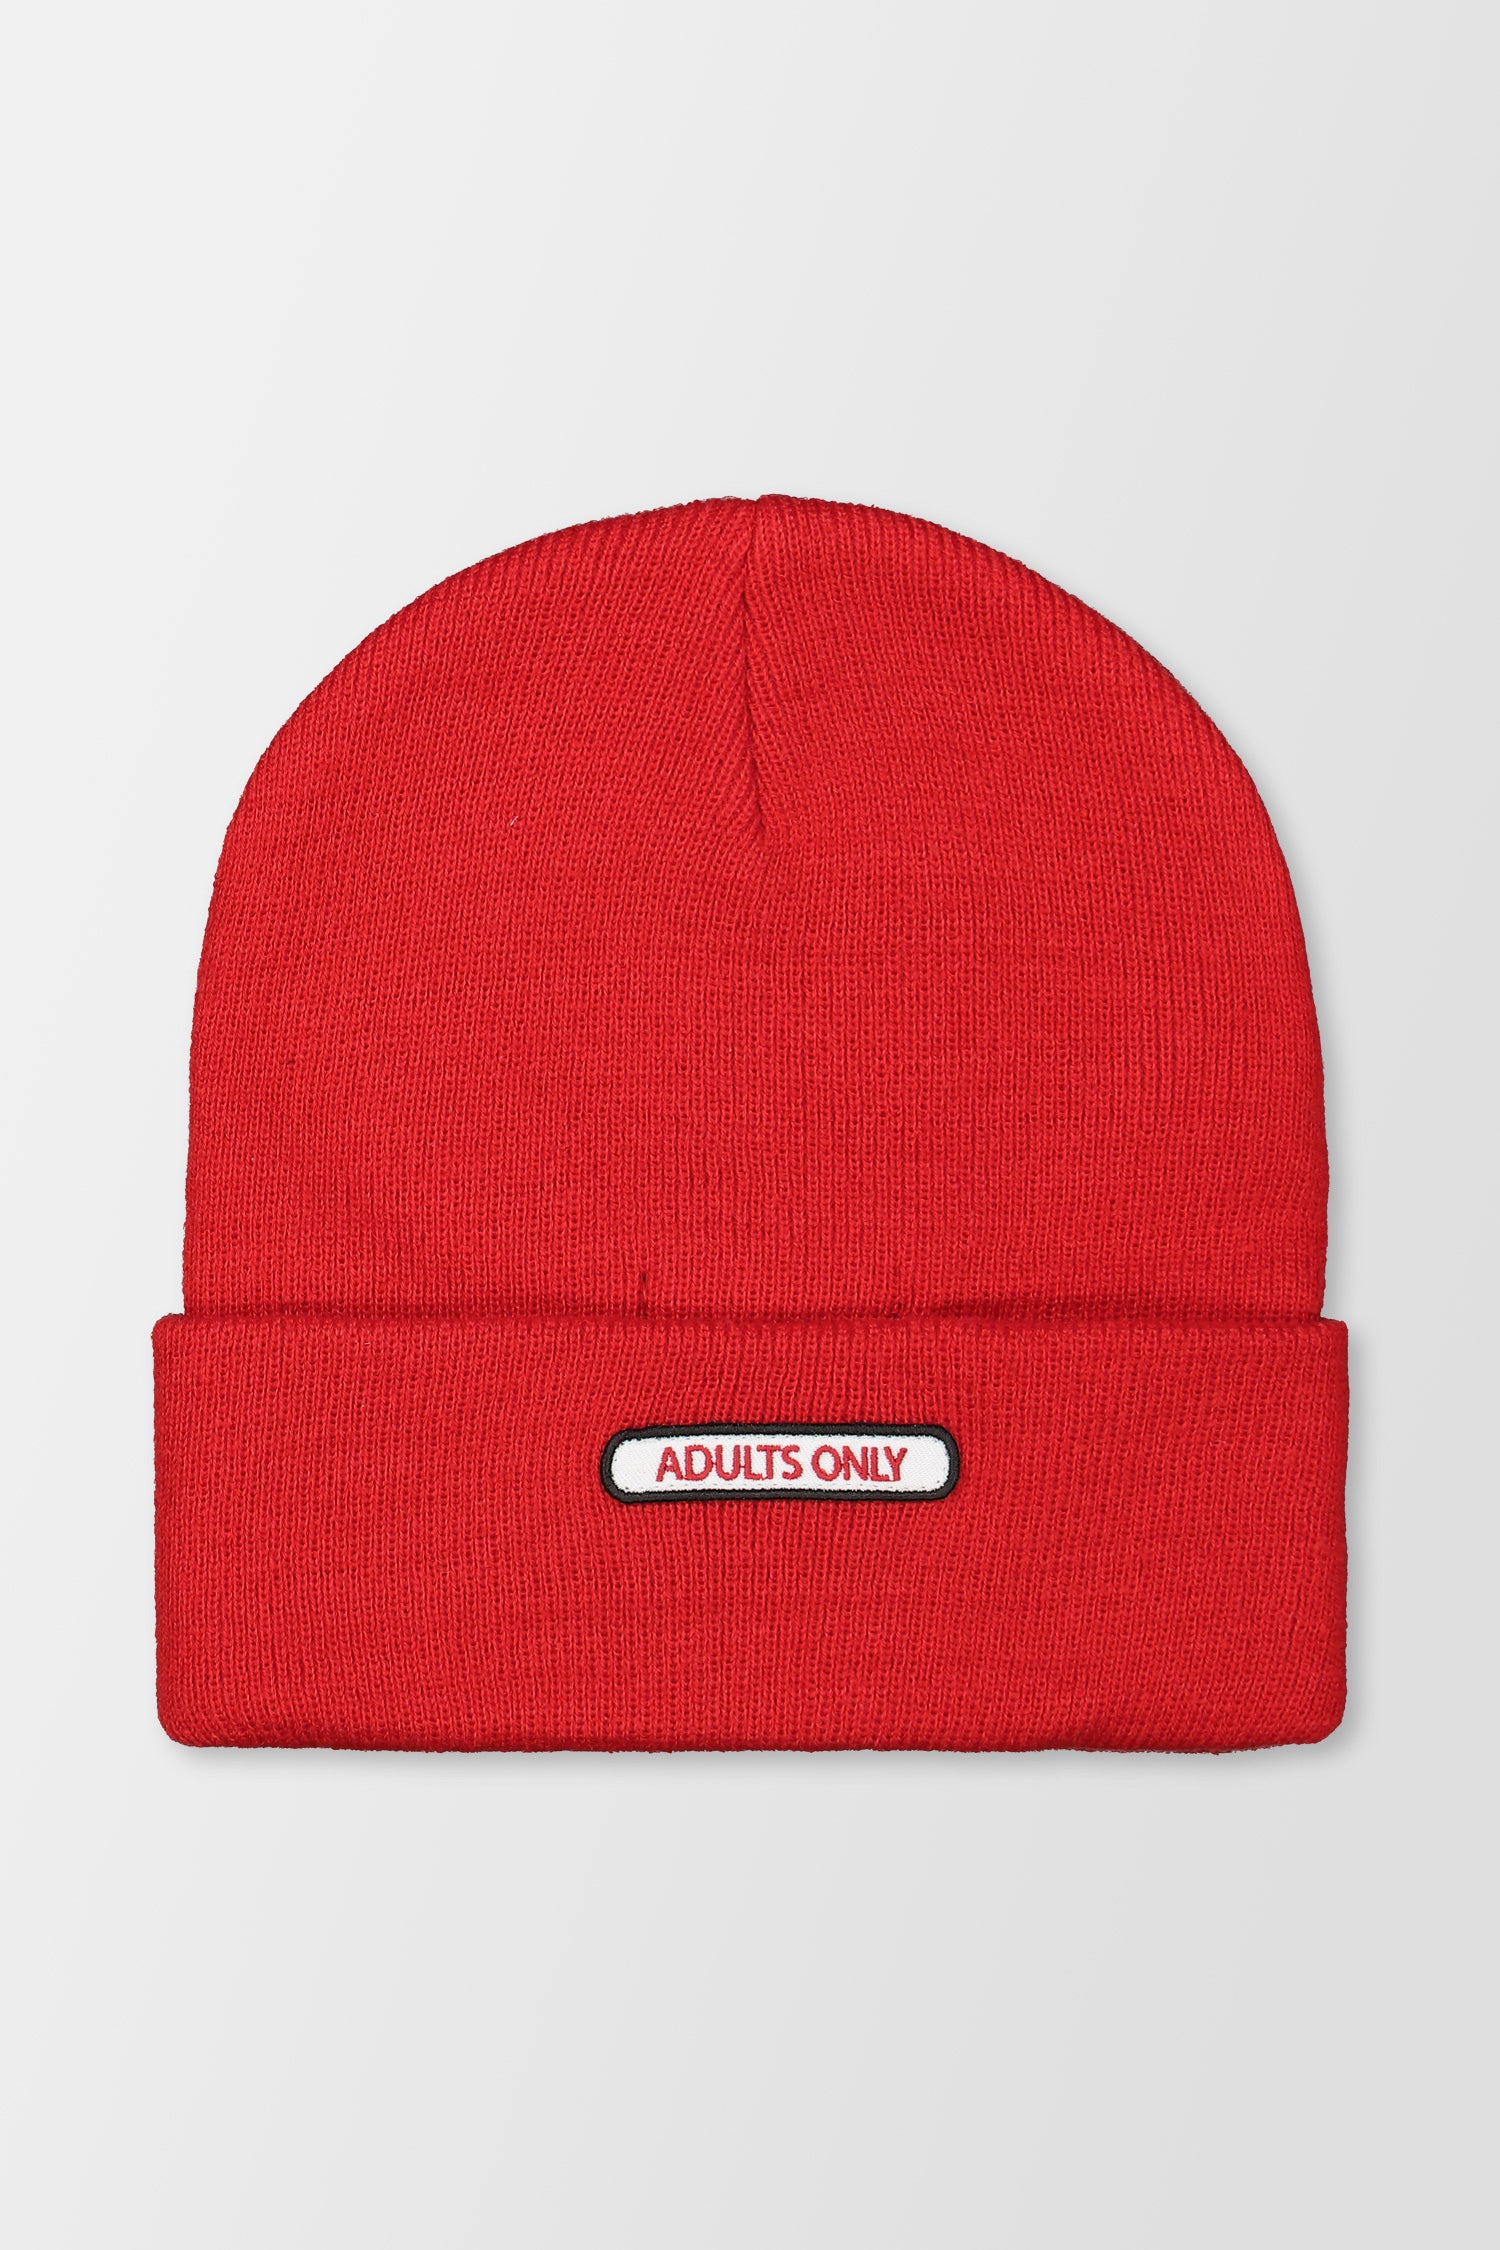 Philipp Plein Red Marvelous Wool Hat